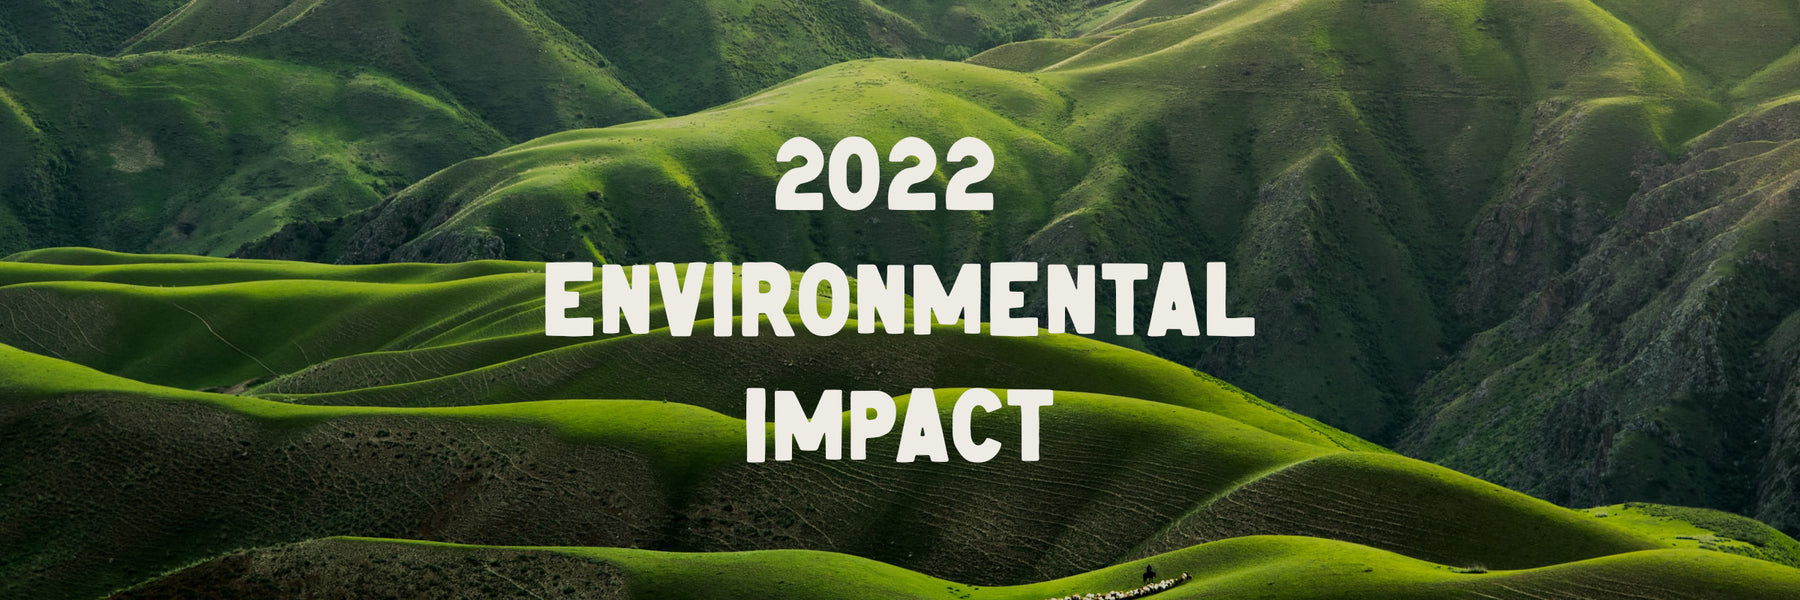 2022 Environmental Impact